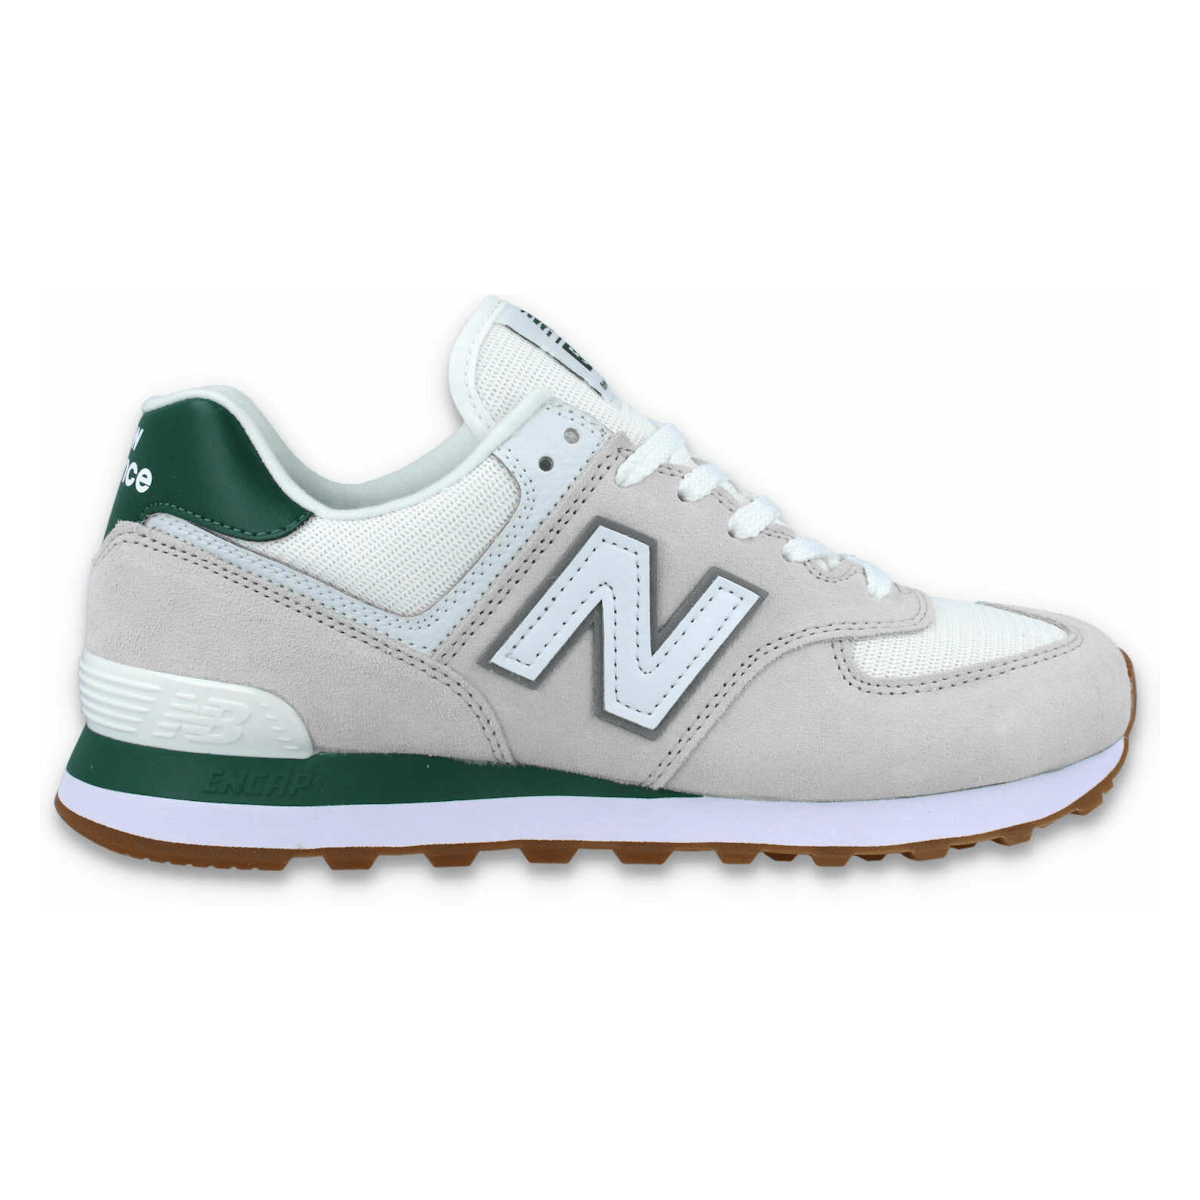 New Balance 574 White Green Gum